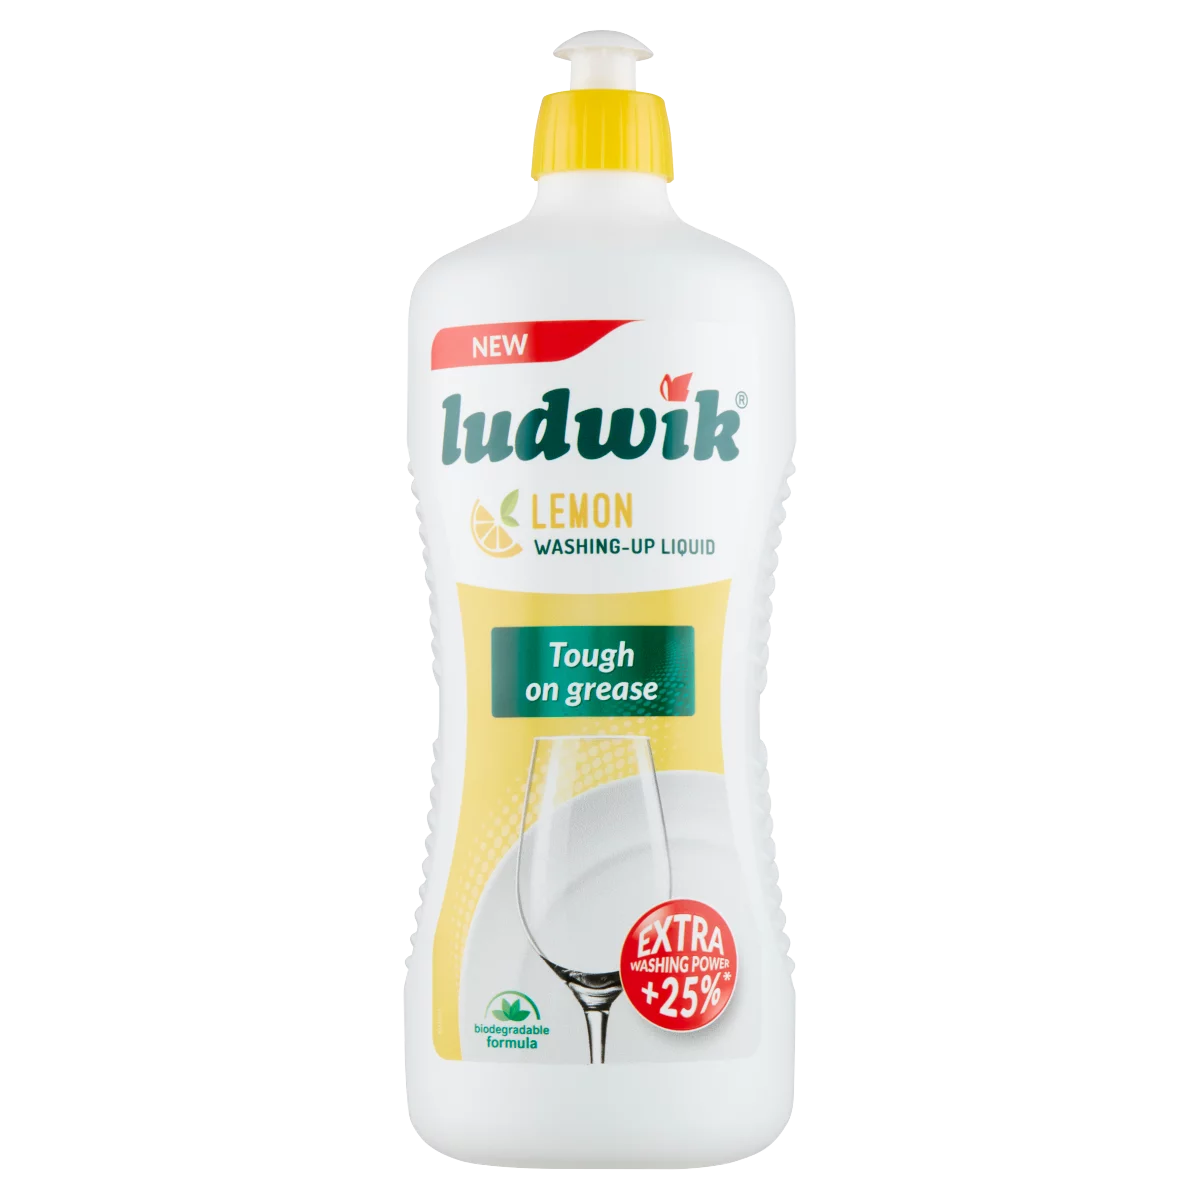 Ludwik citrom illatú mosogatószer 900 g